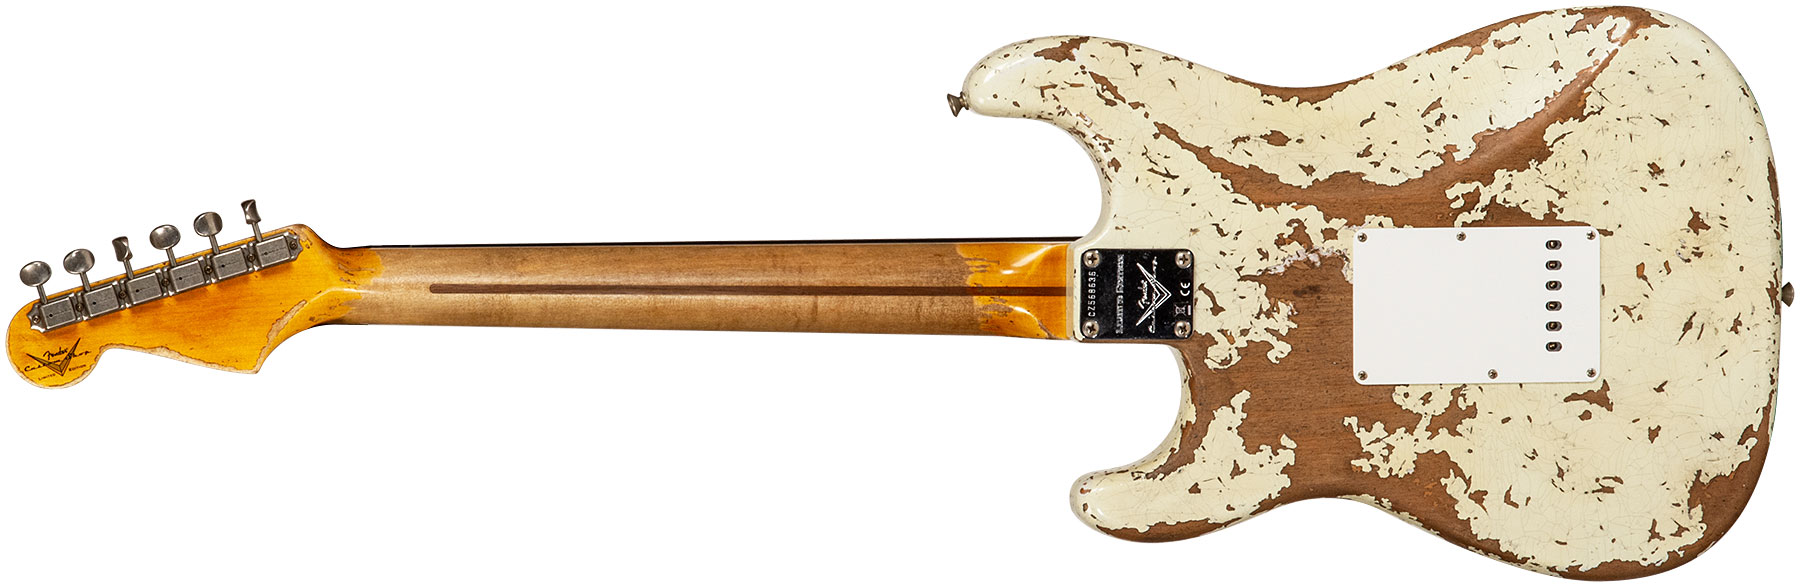 Fender Custom Shop Strat 1956 3s Trem Mn #cz568636 - Super Heavy Relic Aged India Ivory - Guitarra eléctrica con forma de str. - Variation 1